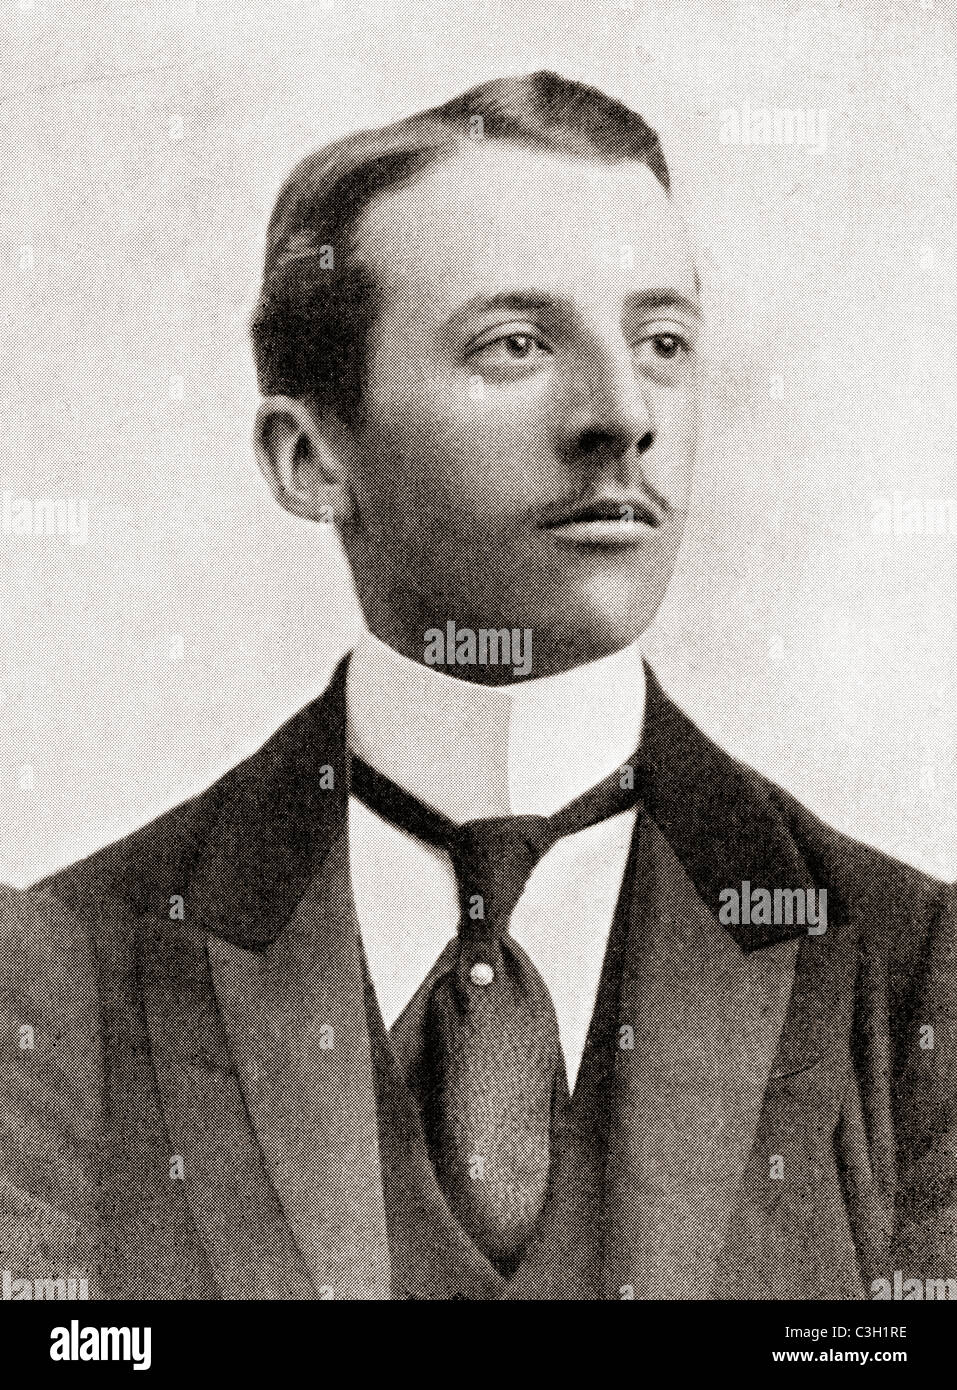 William 'Billy' Charles de Meuron Wentworth-FitzWilliam, 7th Earl FitzWilliam, 1872 - 1943. British aristocrat. Stock Photo